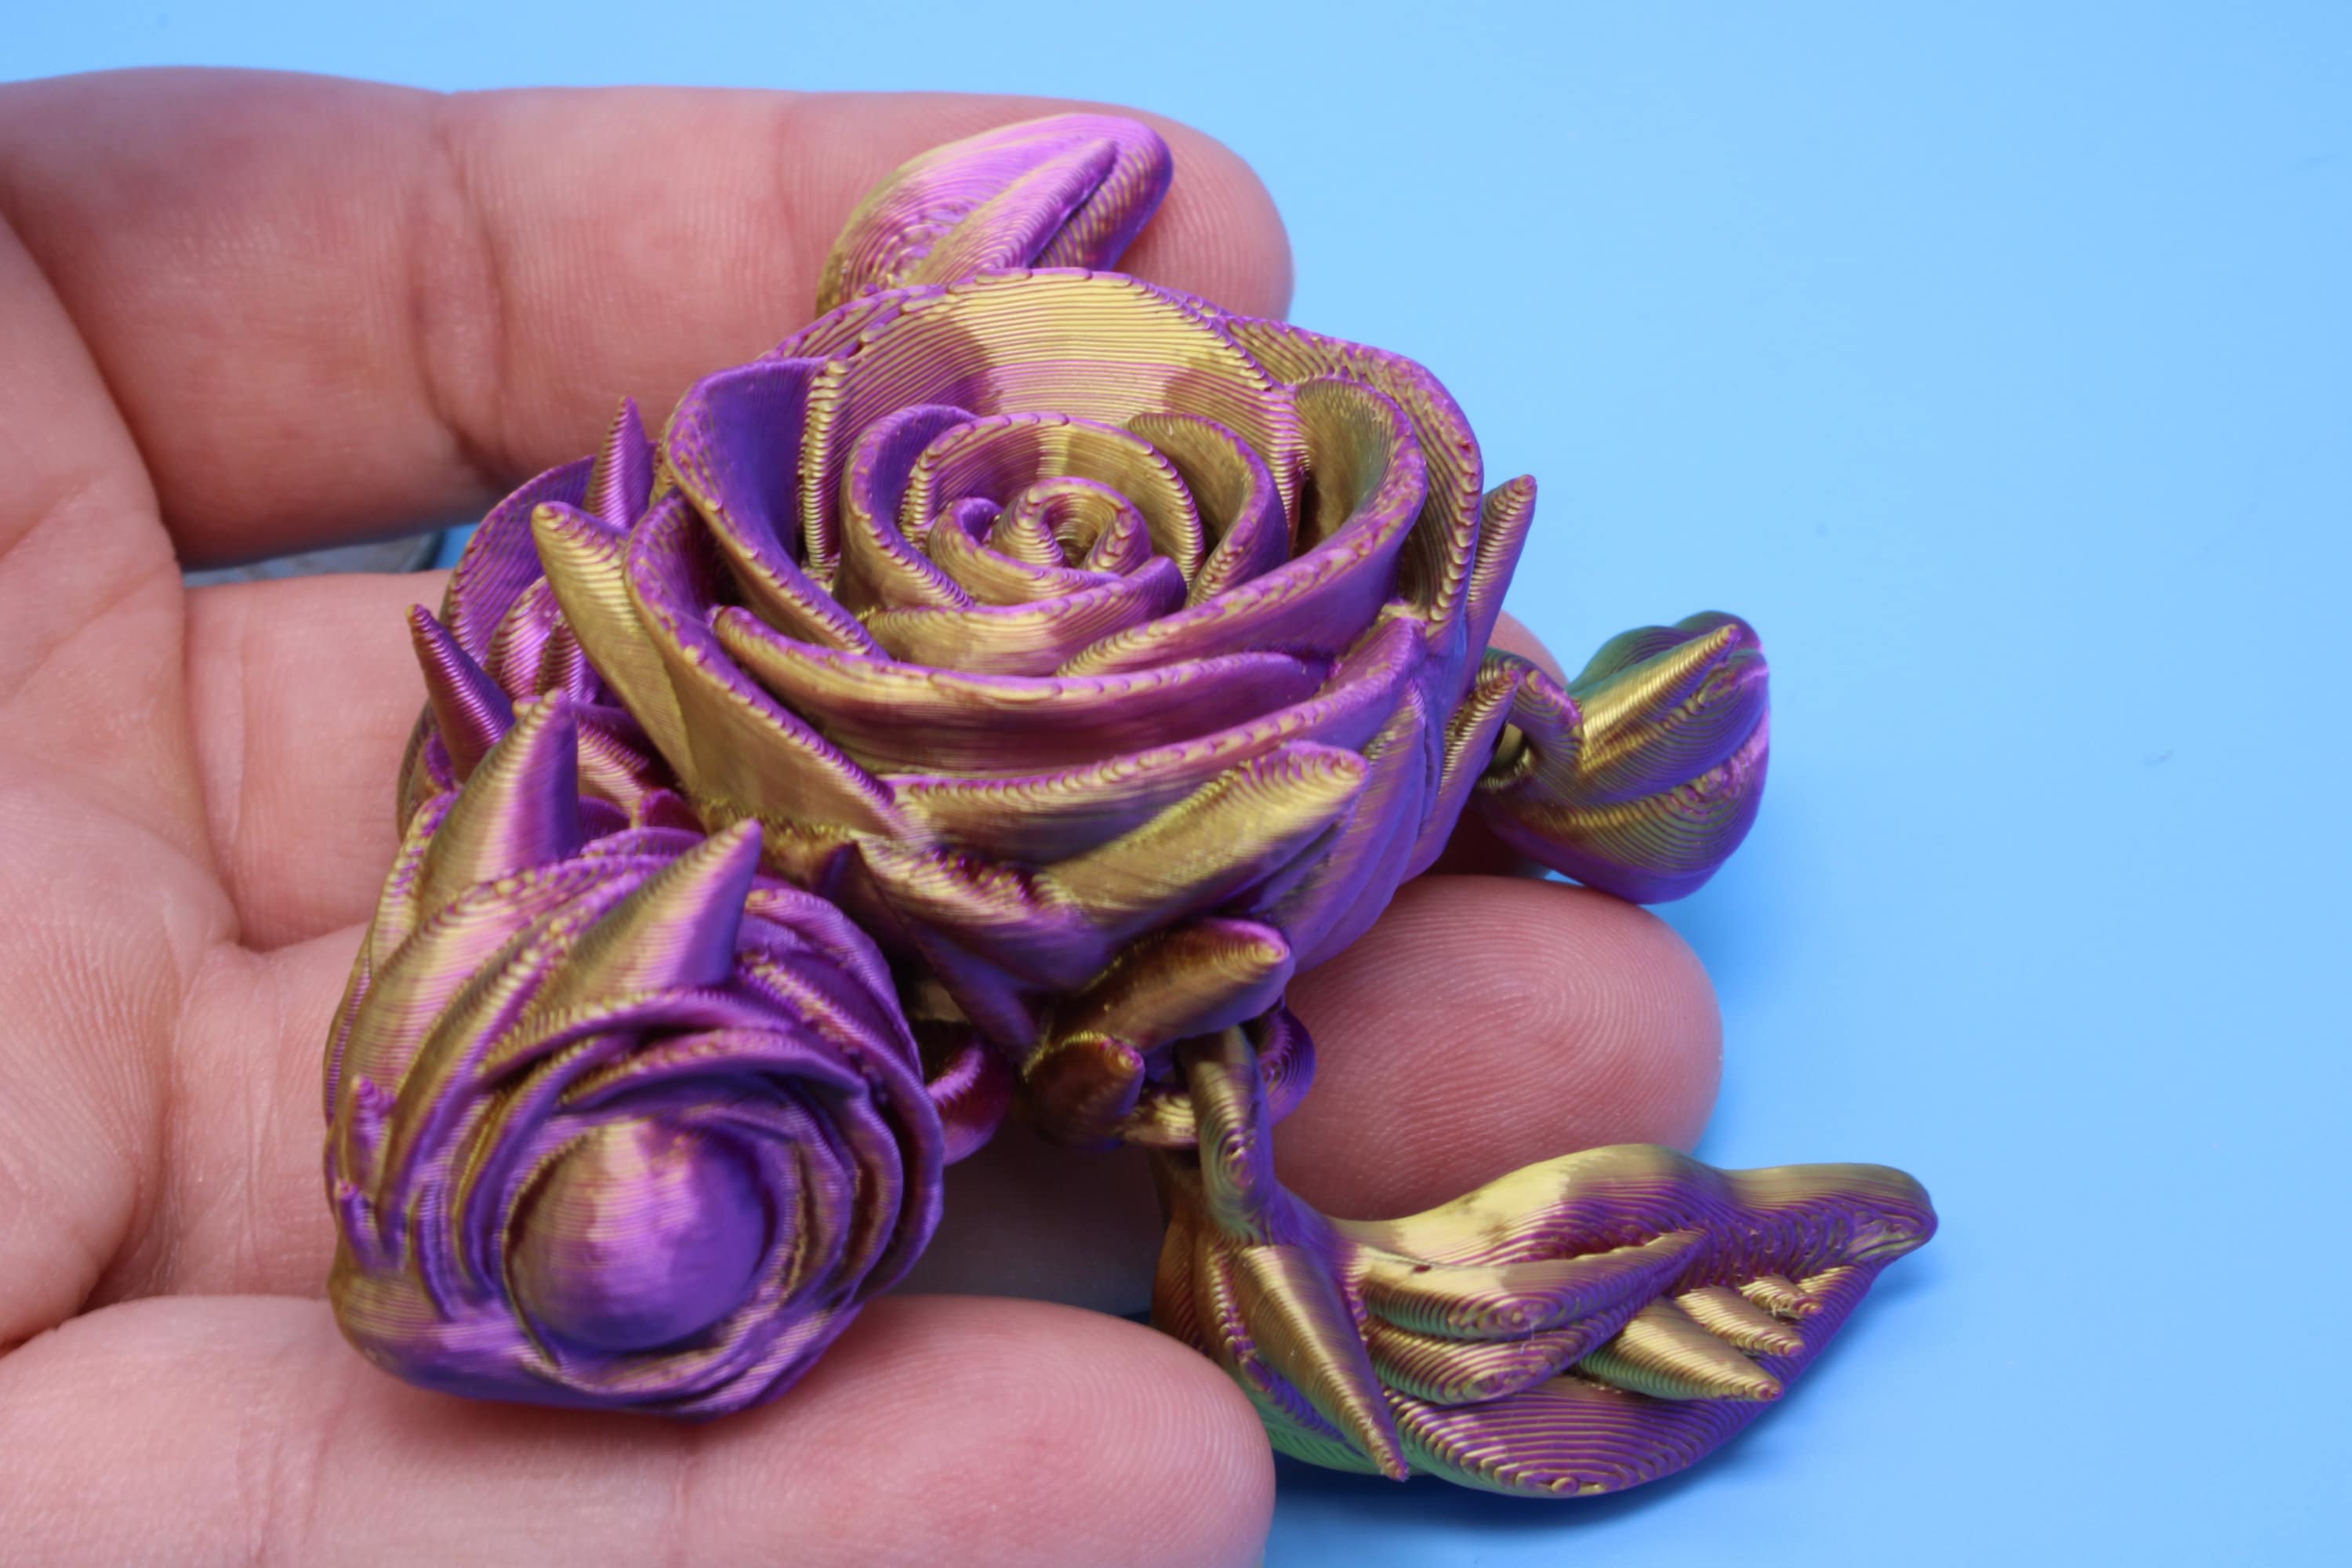 Rose Turtle | Flexi | Fidget | Roseurtle | 3D Printed | 3 in. | Adorable Rose Turtle Buddy.